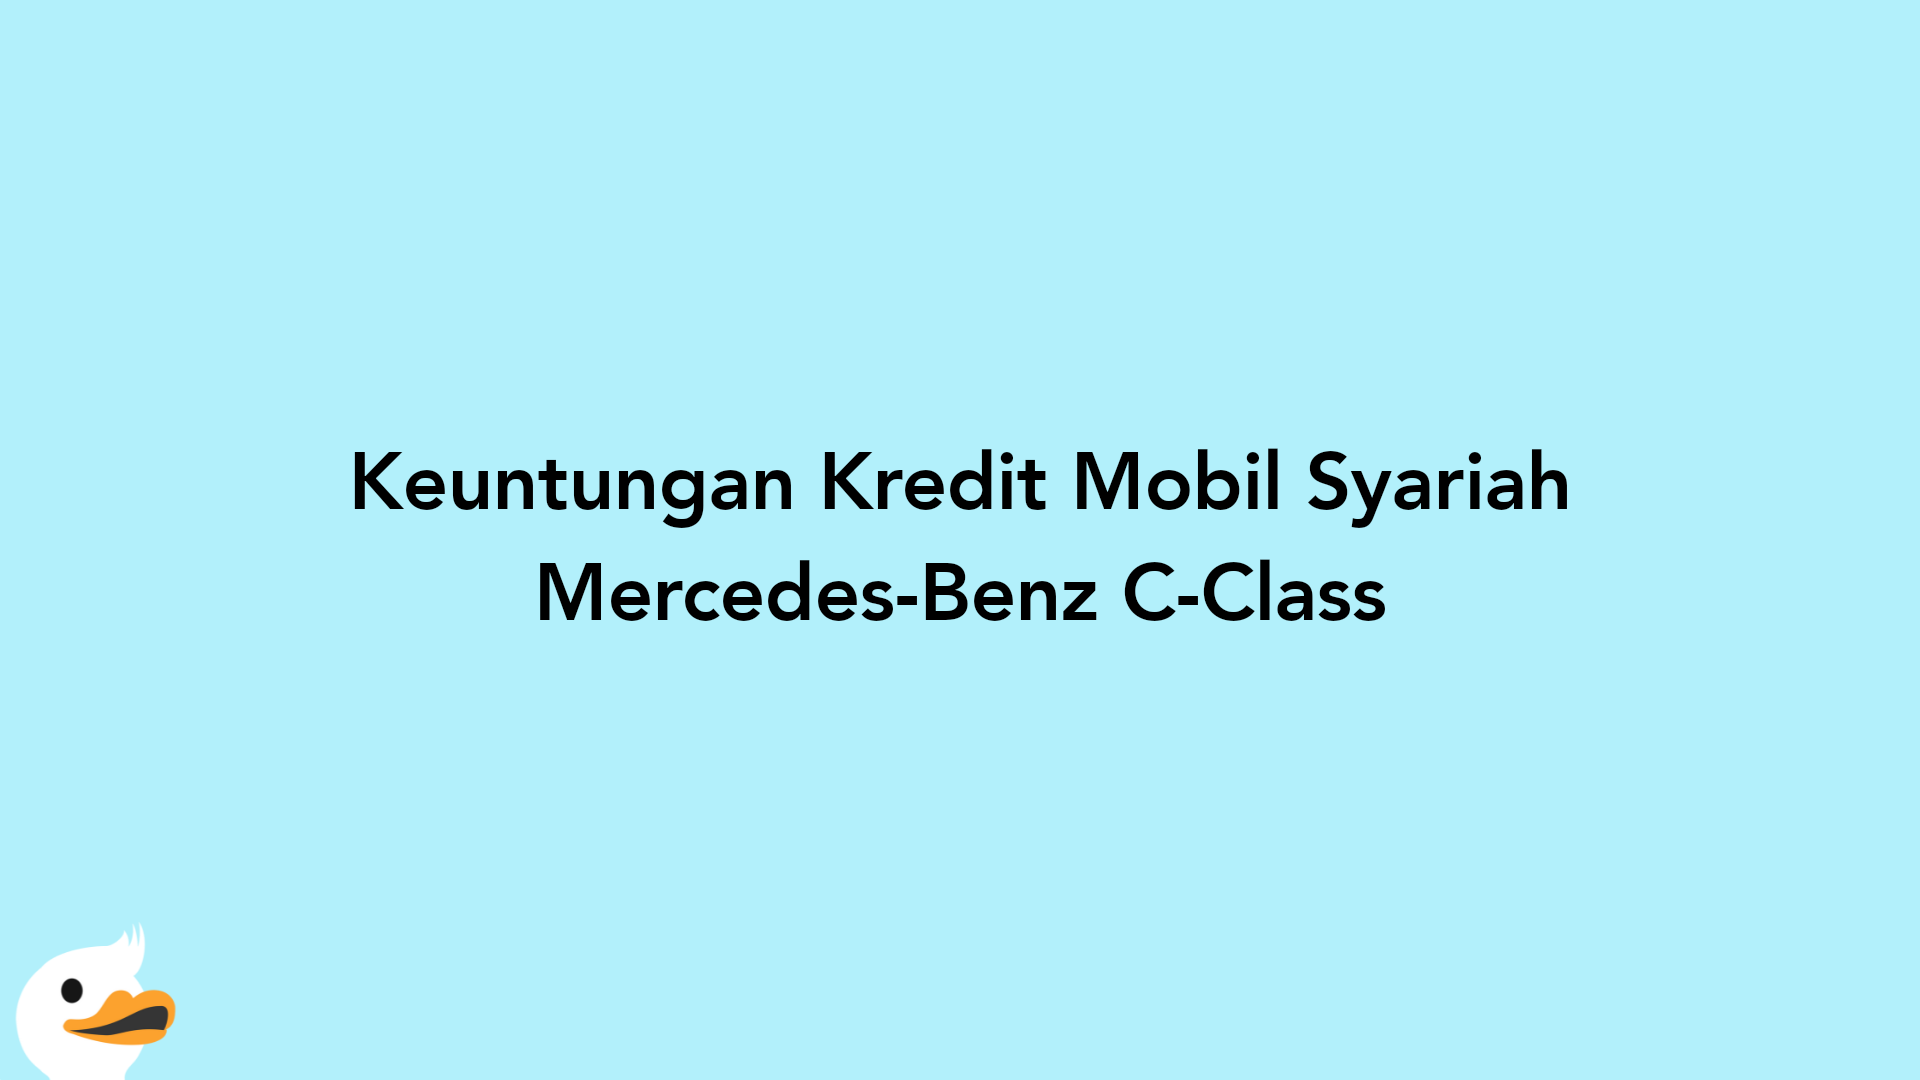 Keuntungan Kredit Mobil Syariah Mercedes-Benz C-Class